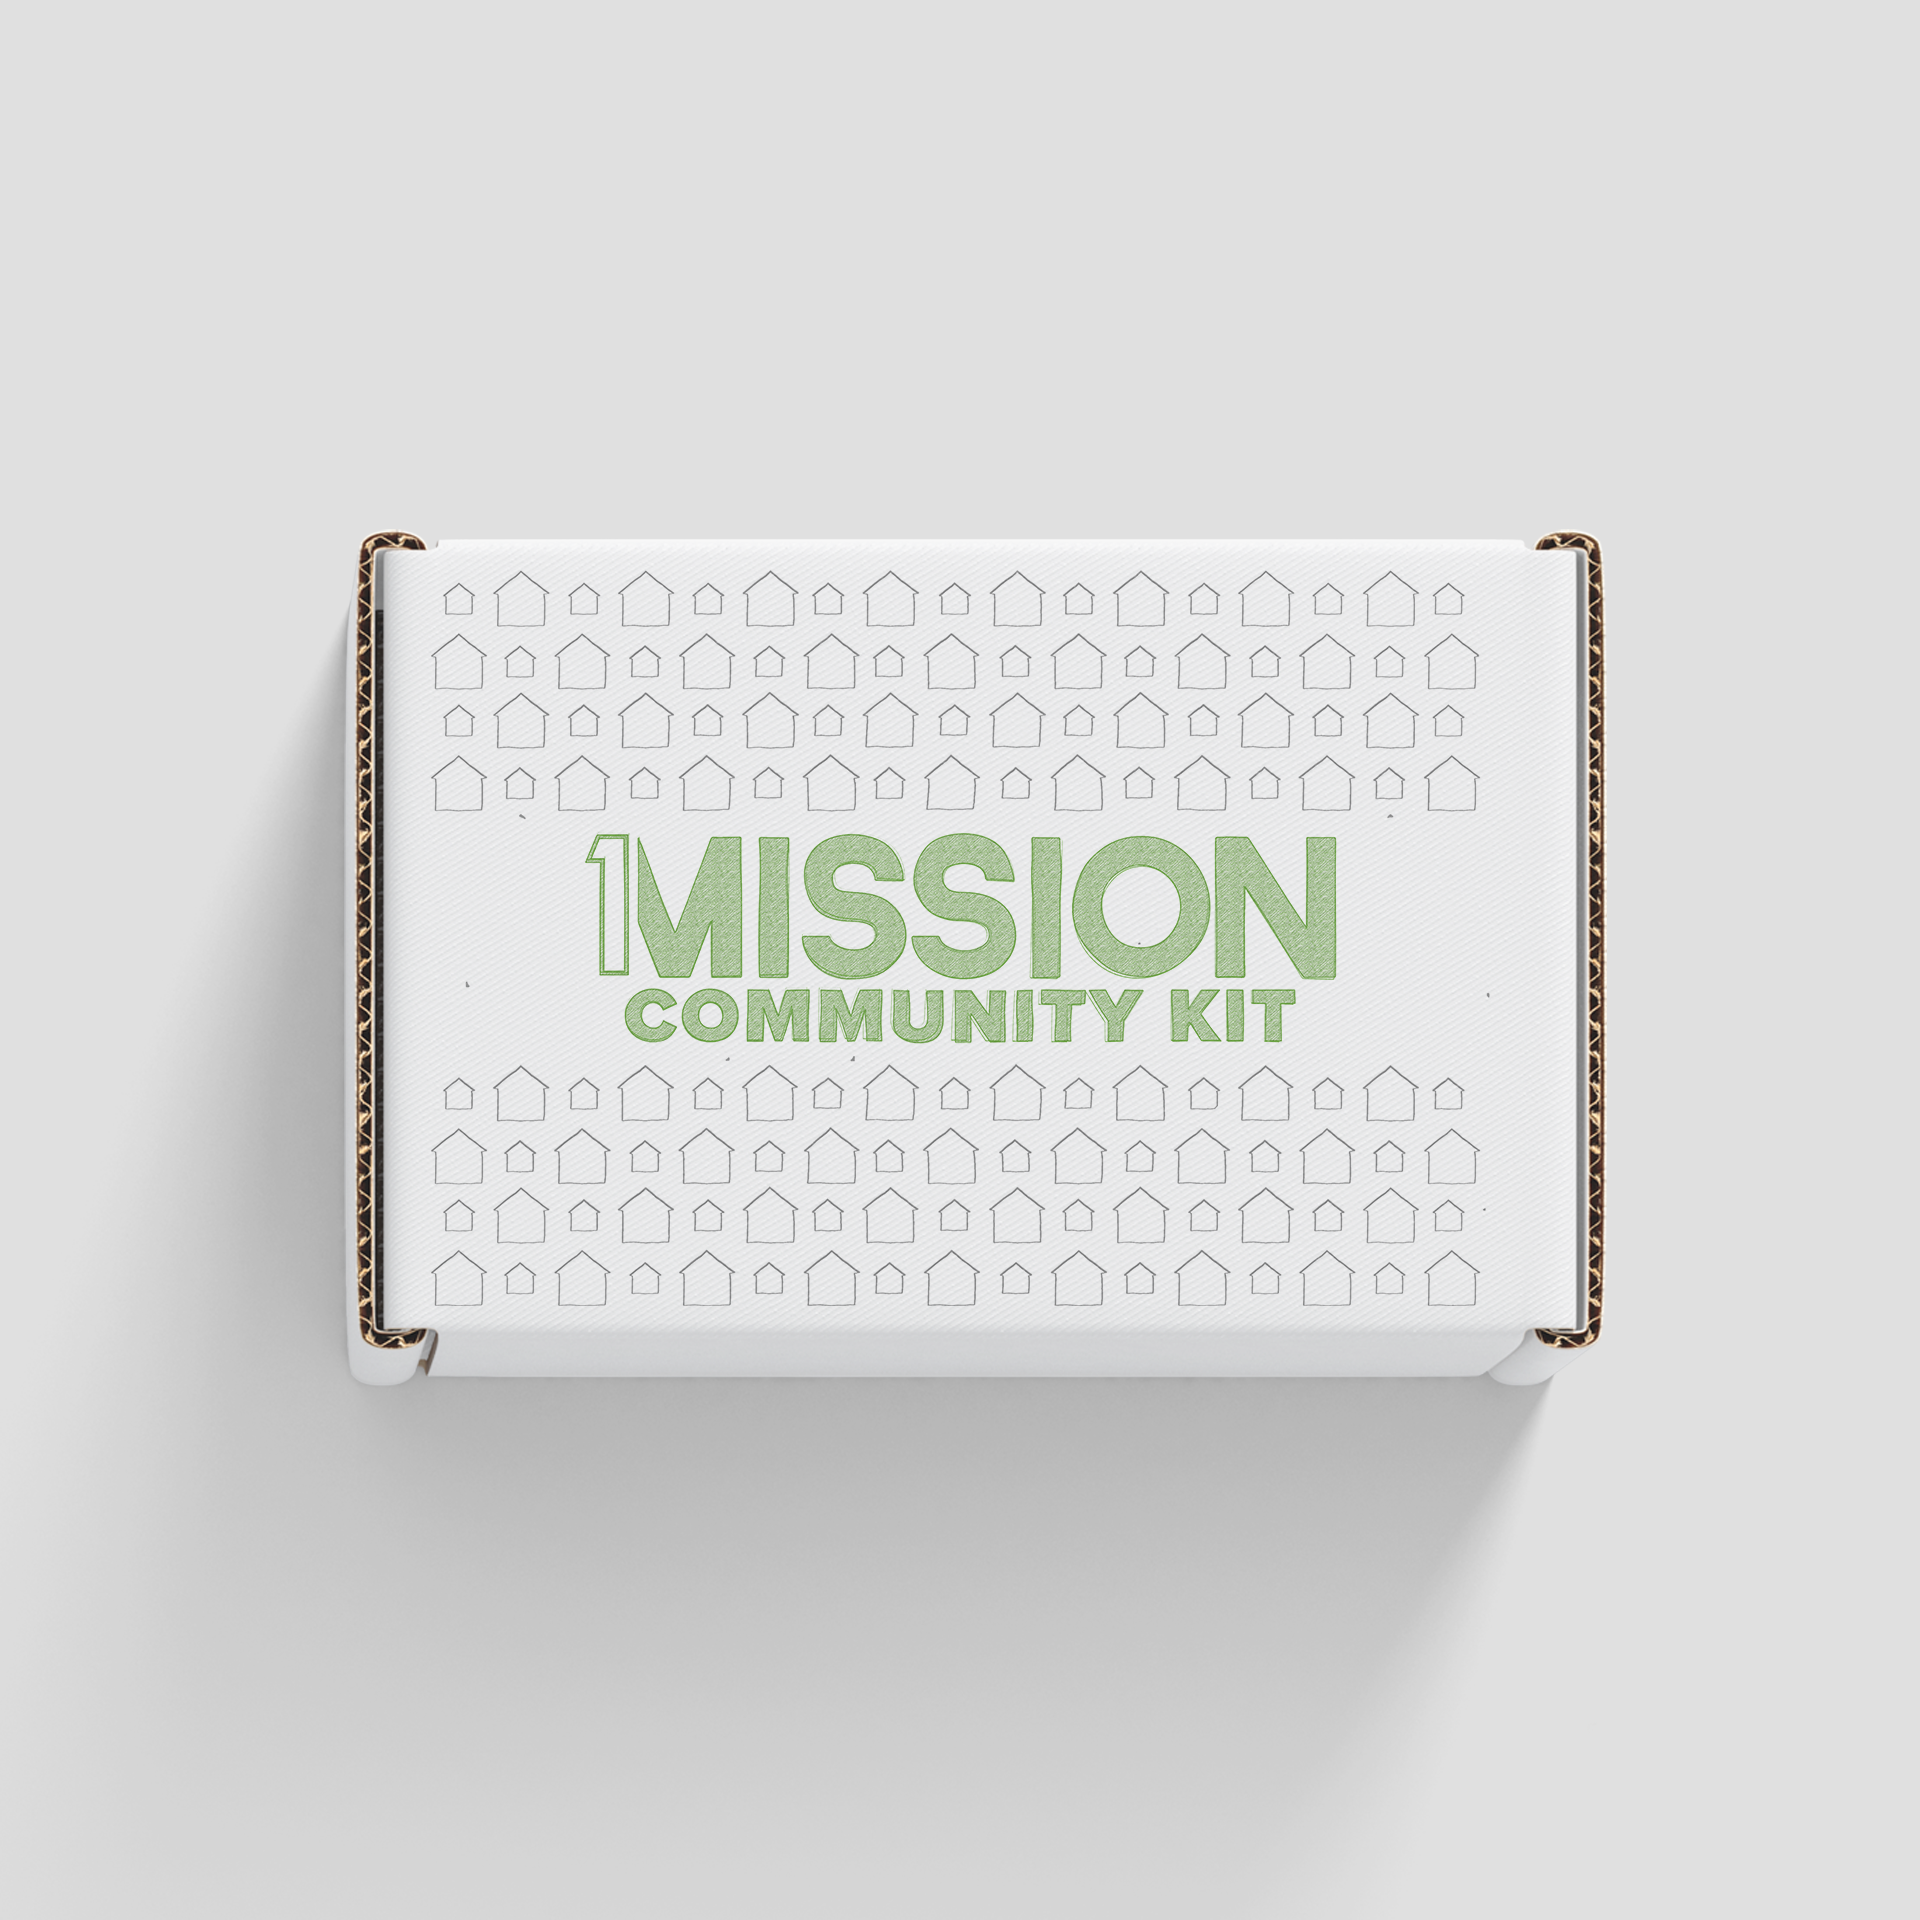 1MISSION Community Kit